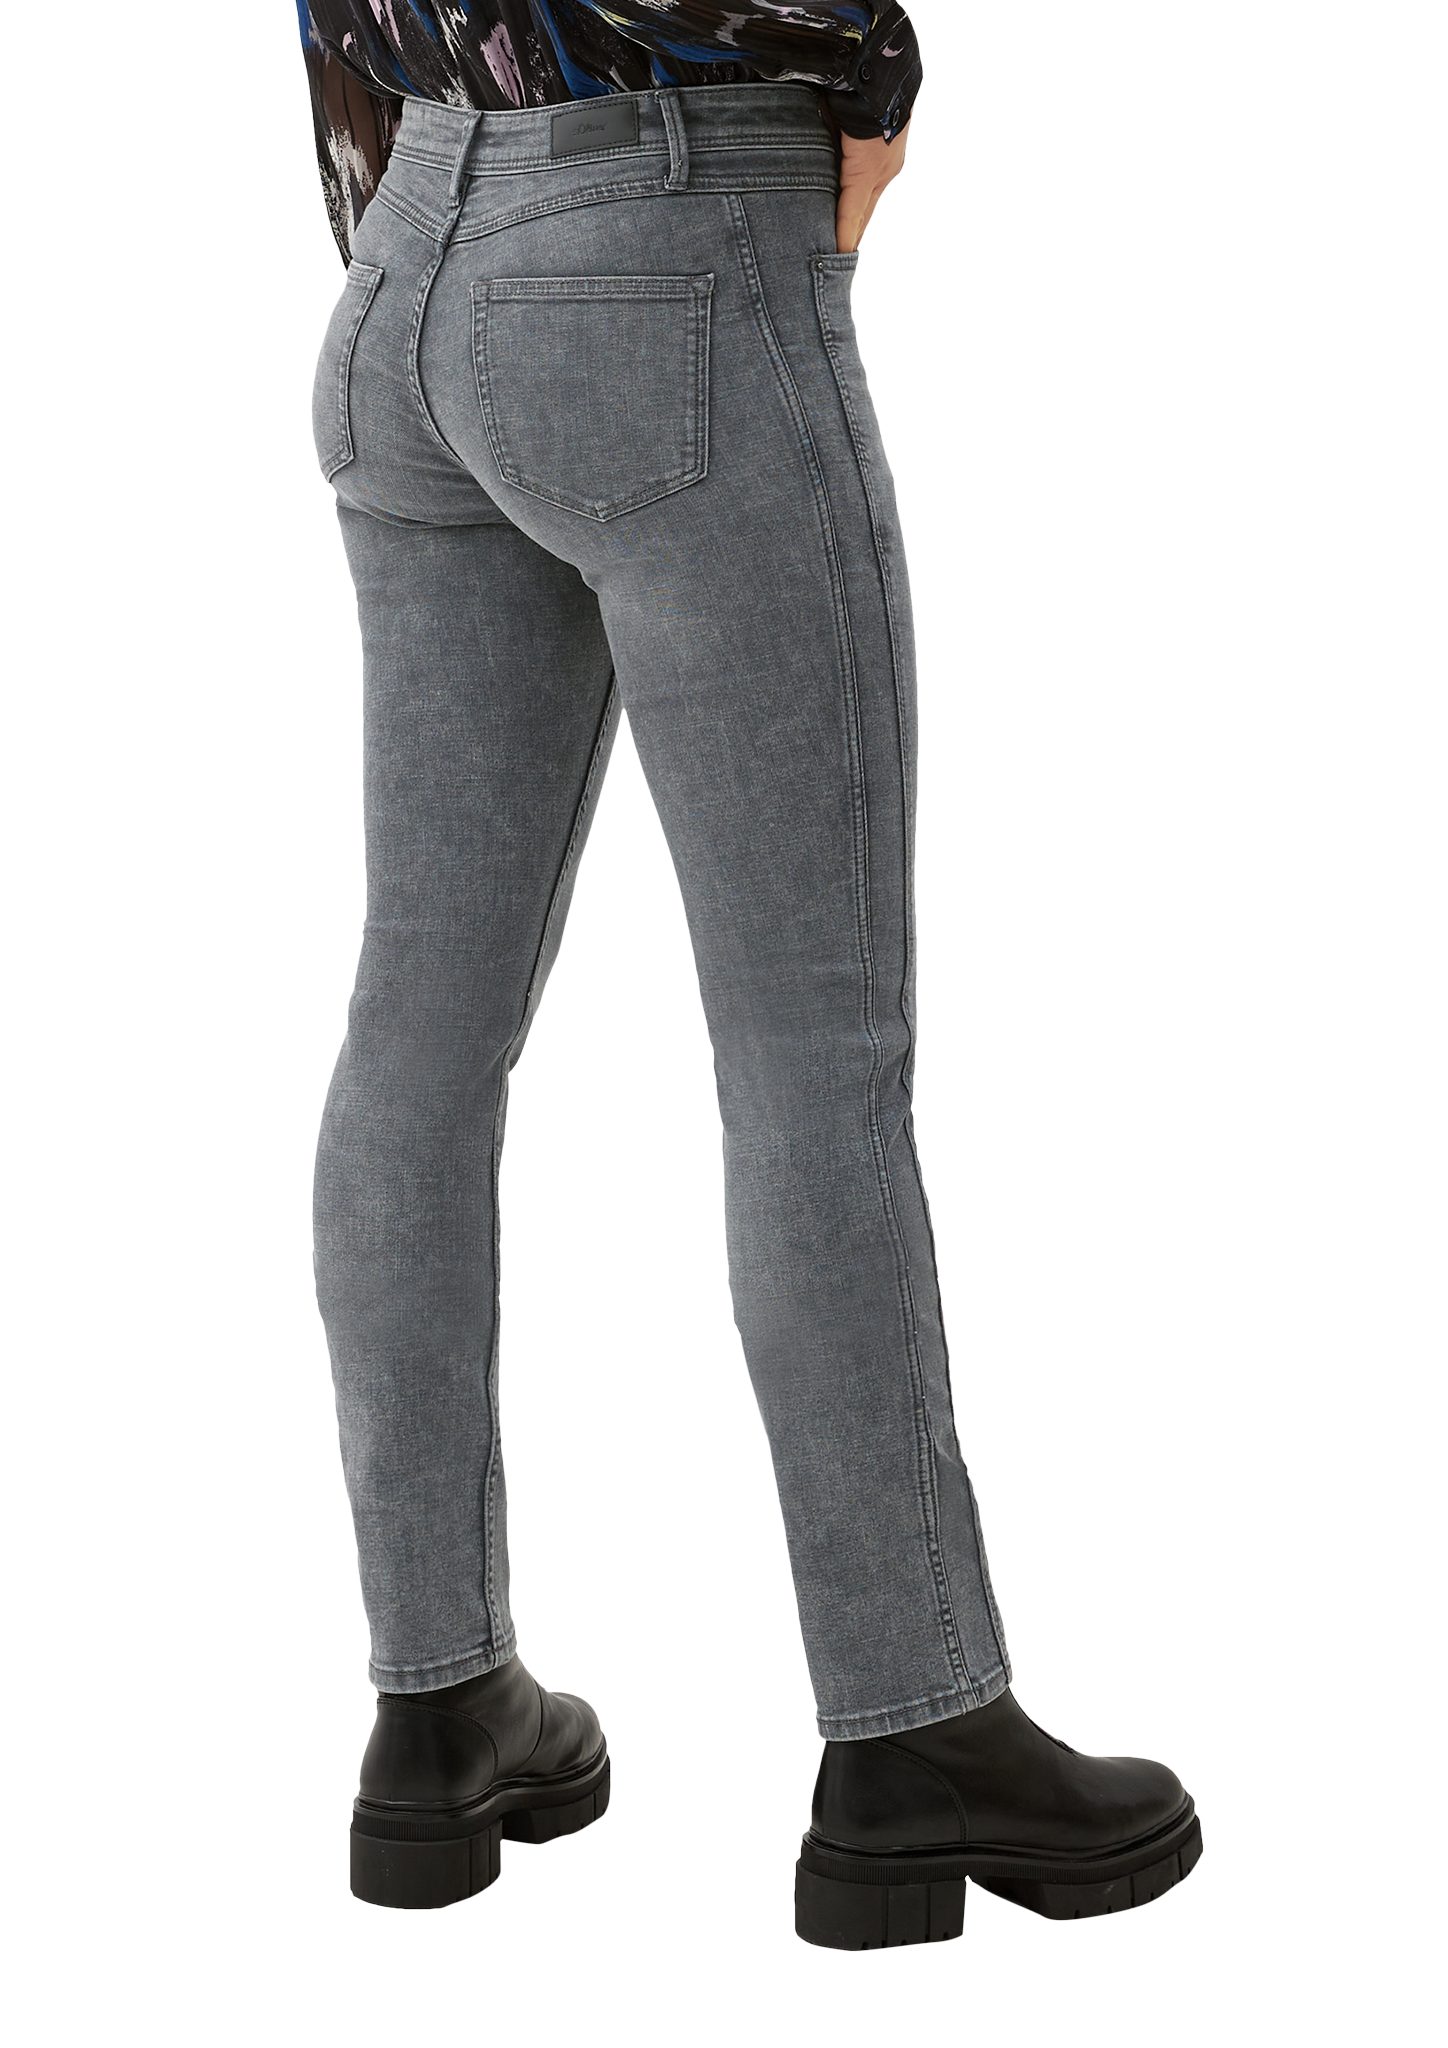 s.Oliver 5-Pocket-Jeans Leg Mid Slim / Jeans / Betsy Waschung, schiefergrau / Fit Leder-Patch, Rise Slim Ziernaht